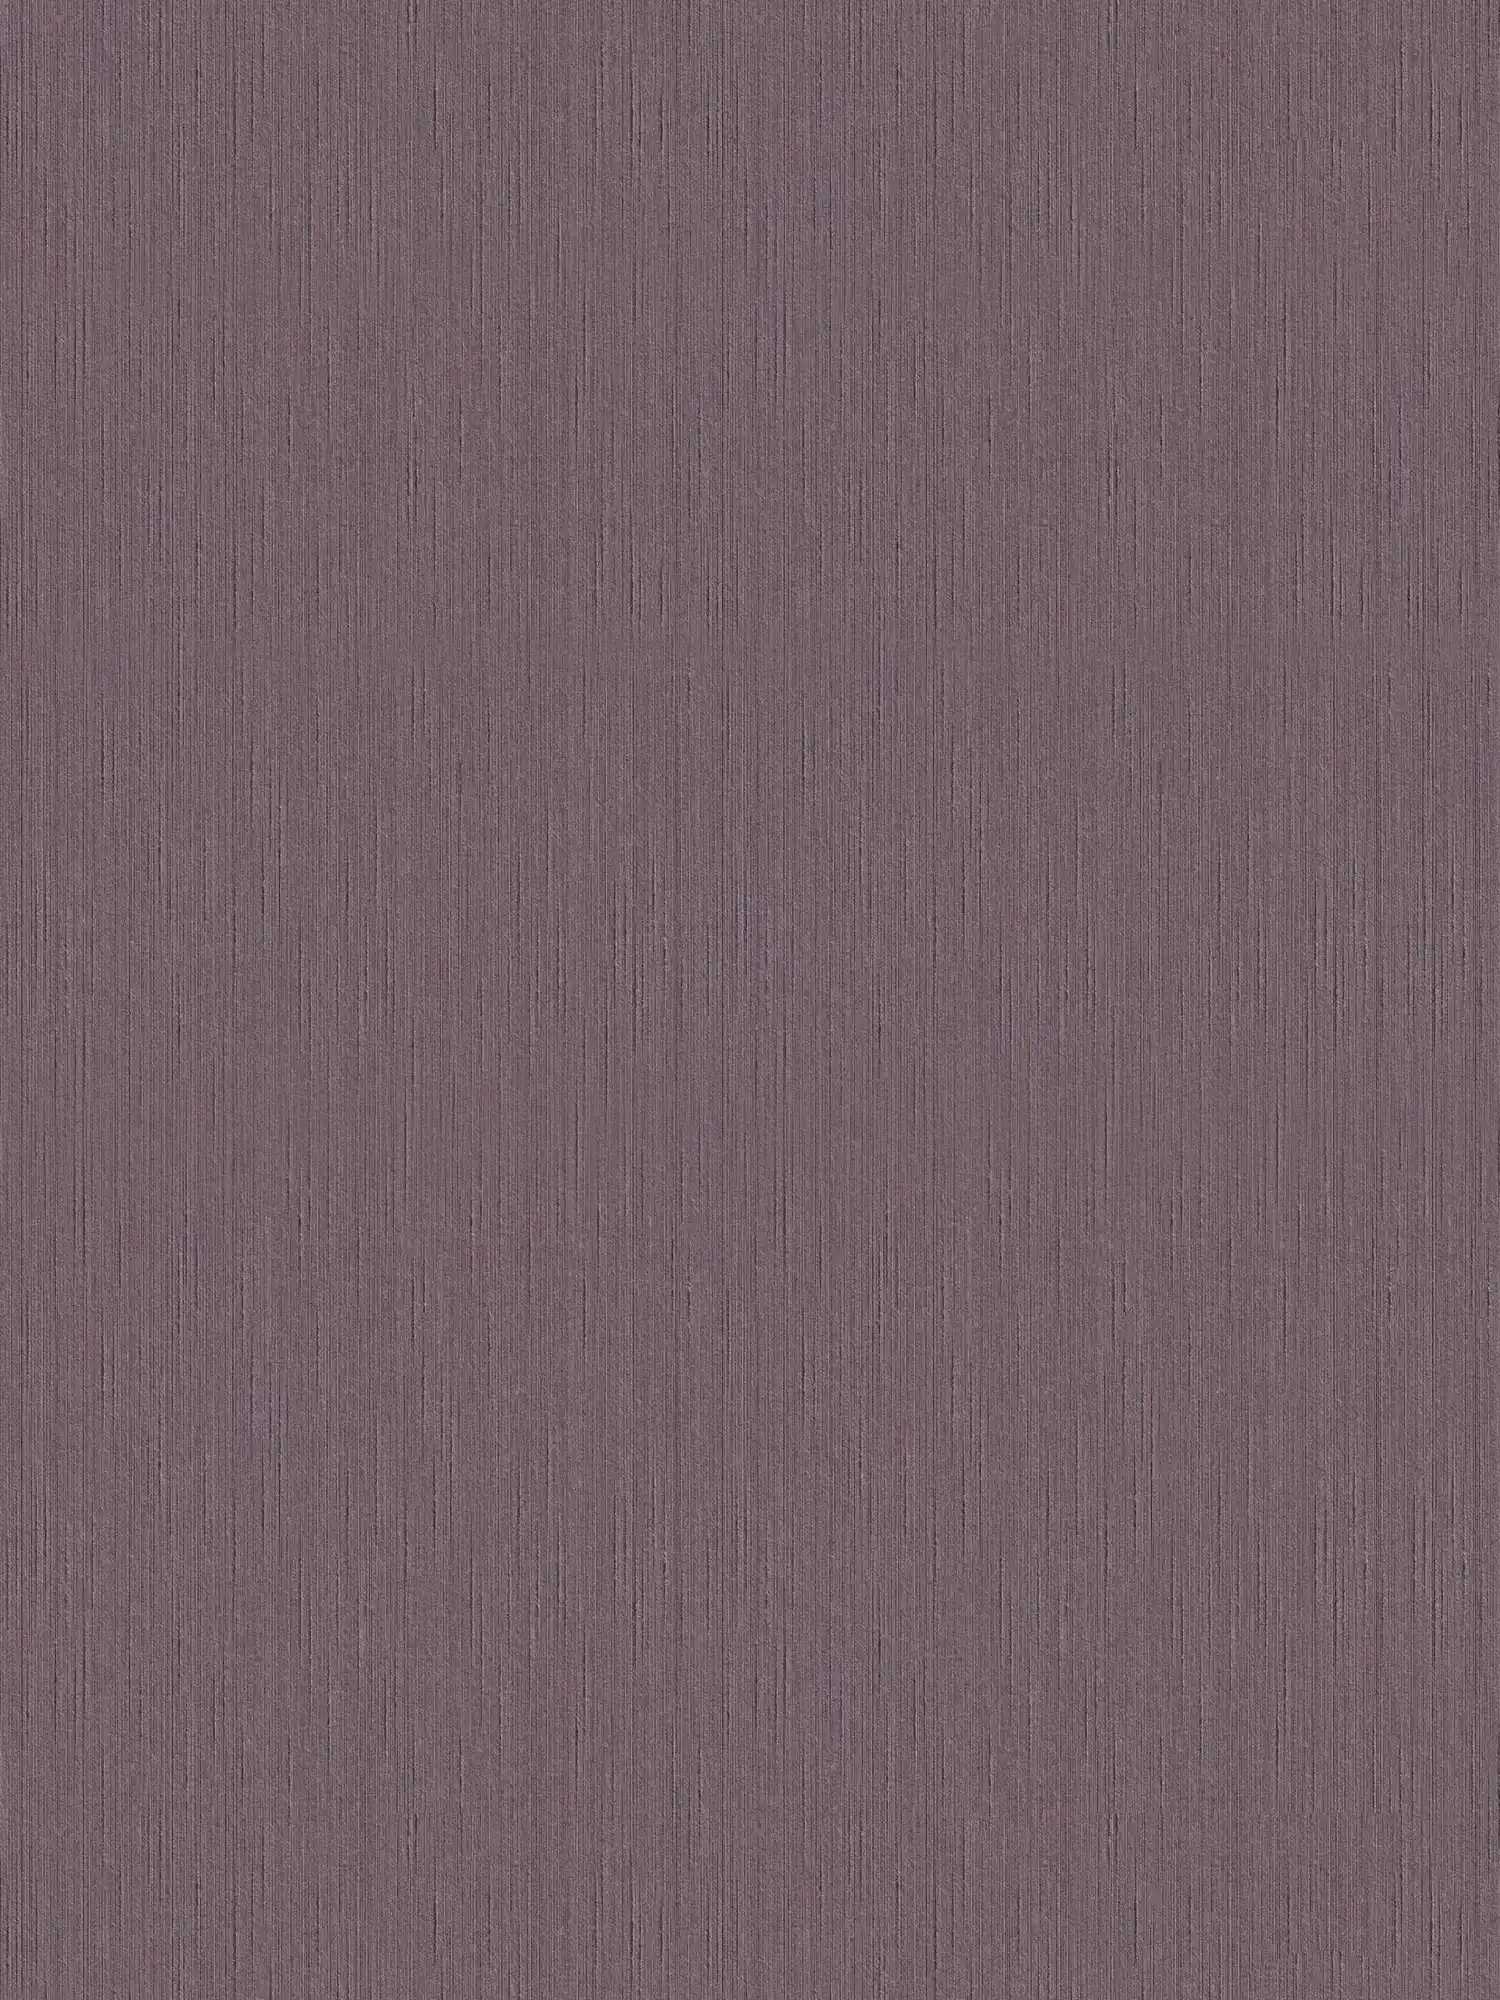 Wallpaper dark mauve with natural texture - purple, violet
